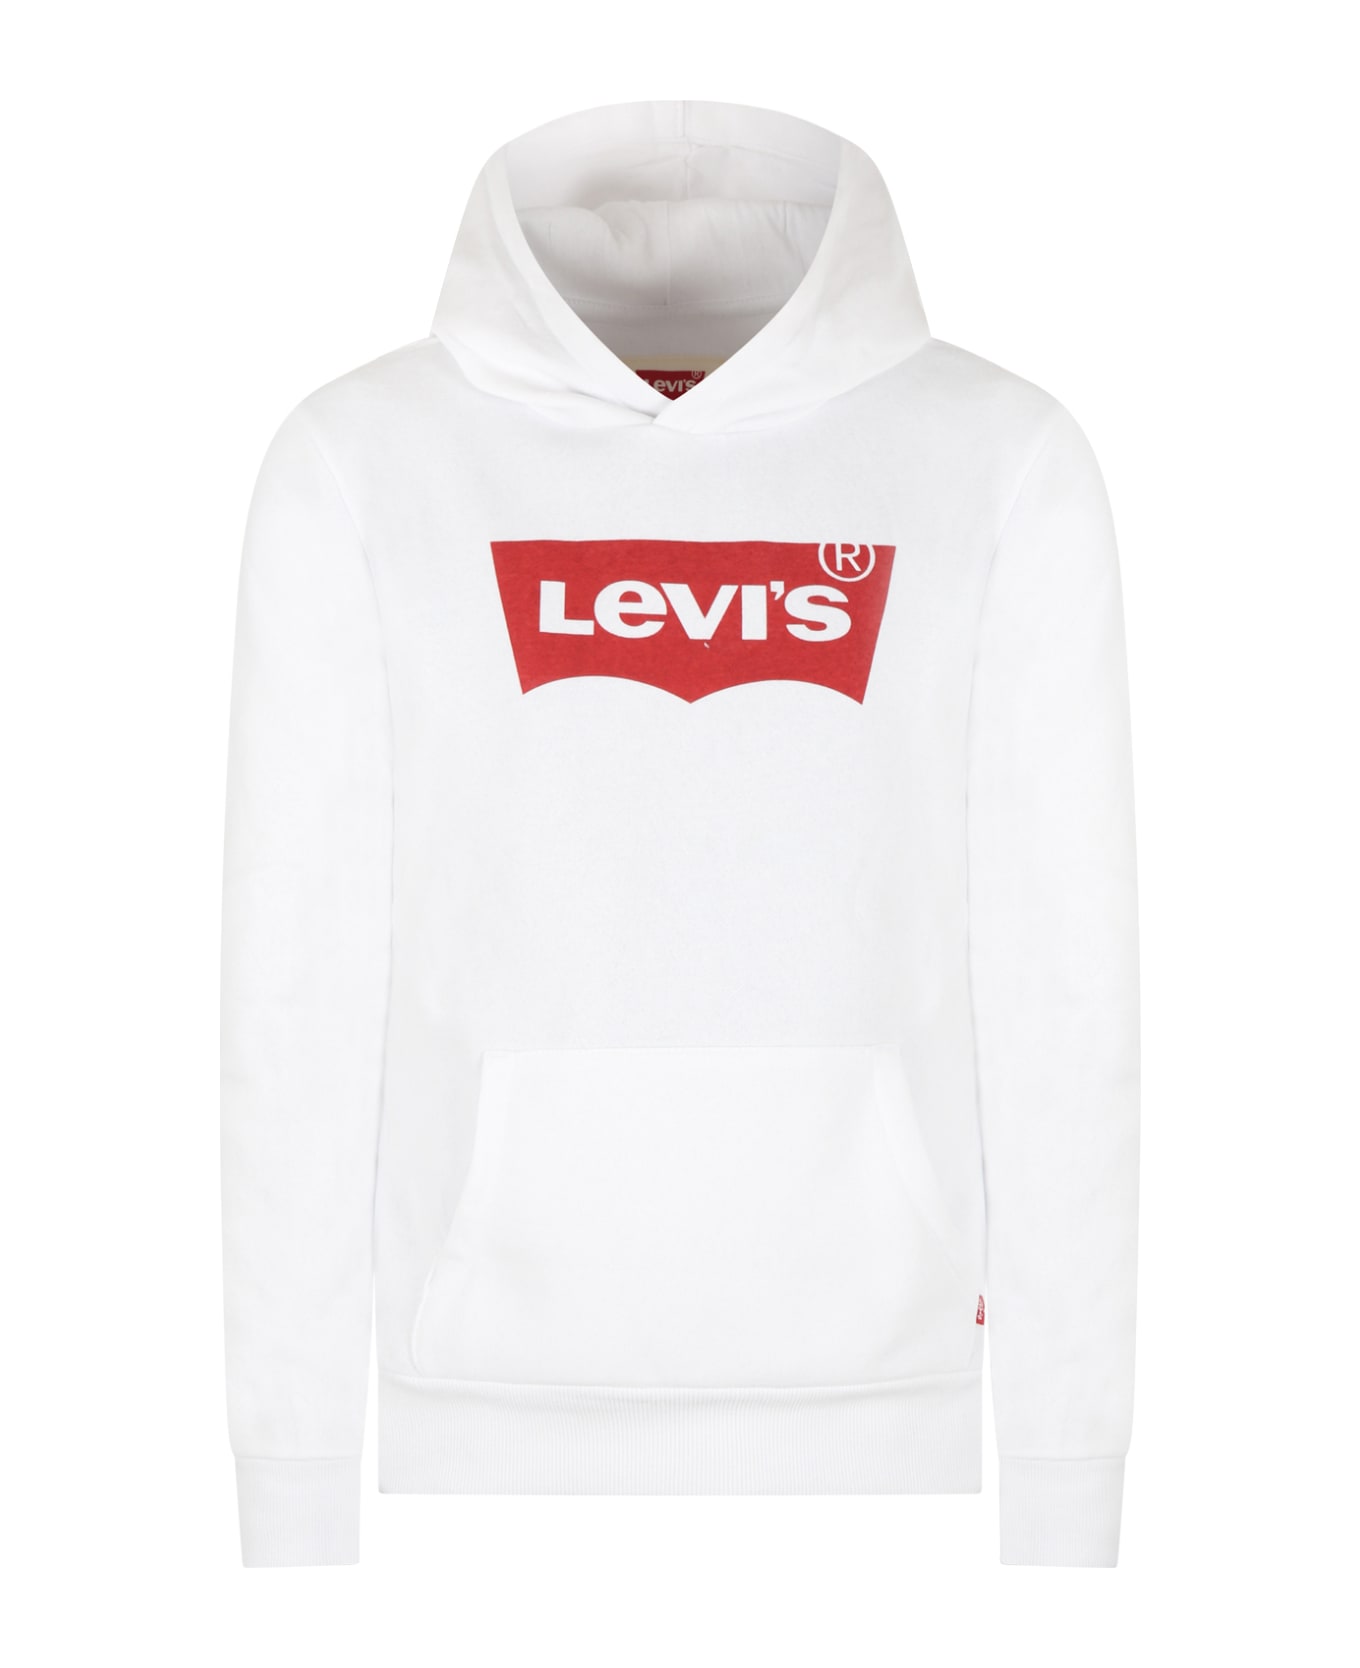 Levi's White Sweatshirt For Kids With Logo - White